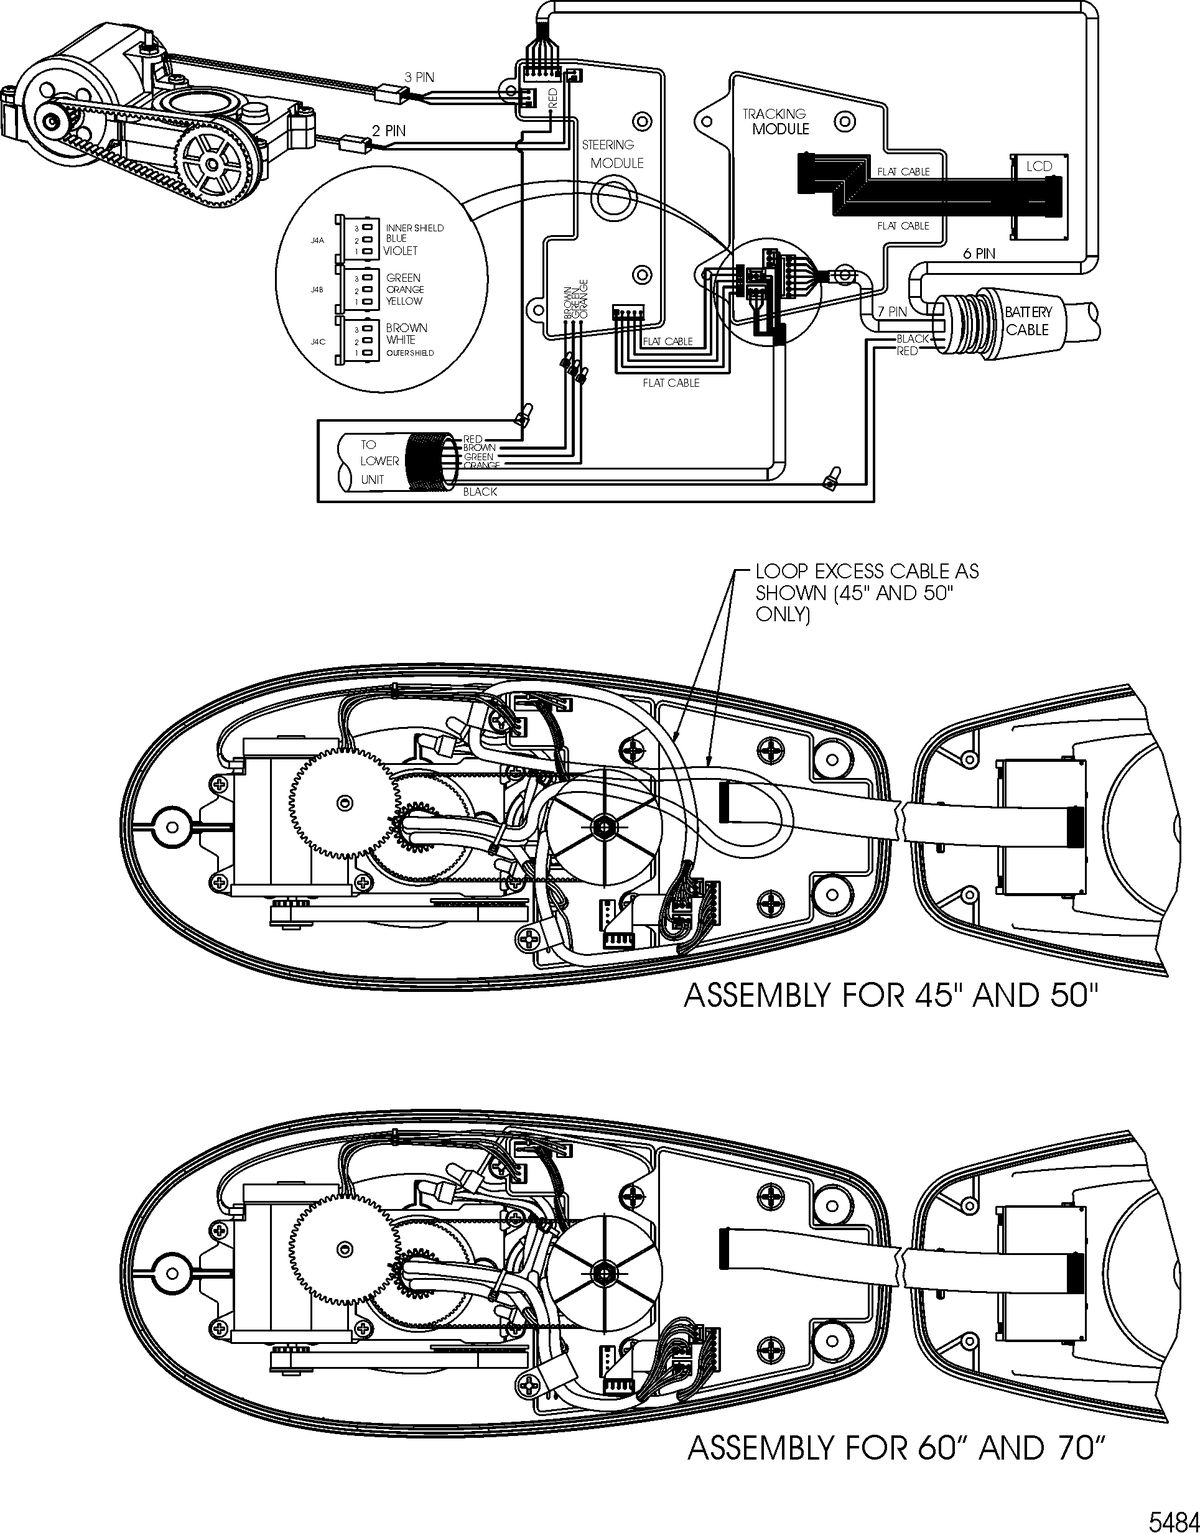 TROLLING MOTOR MOTORGUIDE PTSV SERIES Wire Diagram(Model PTSV109FBD) (36 Volt)